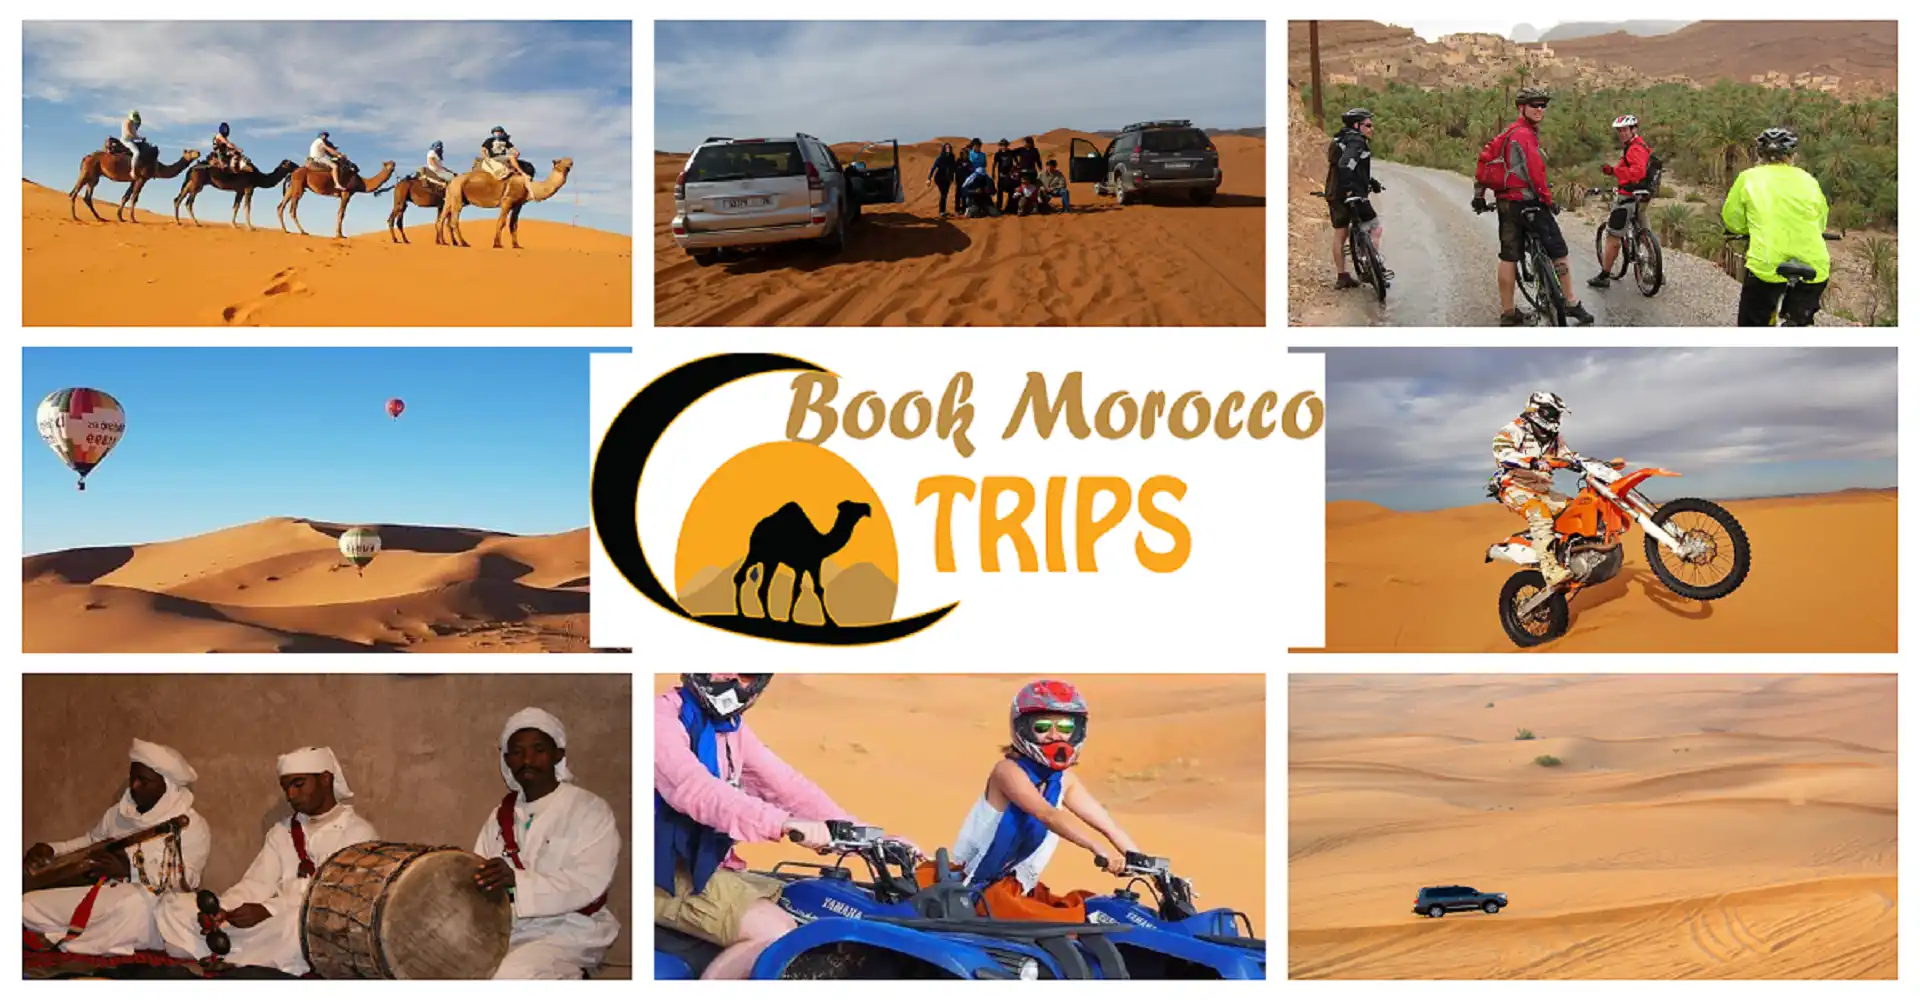 Contact Book Morocco Trips